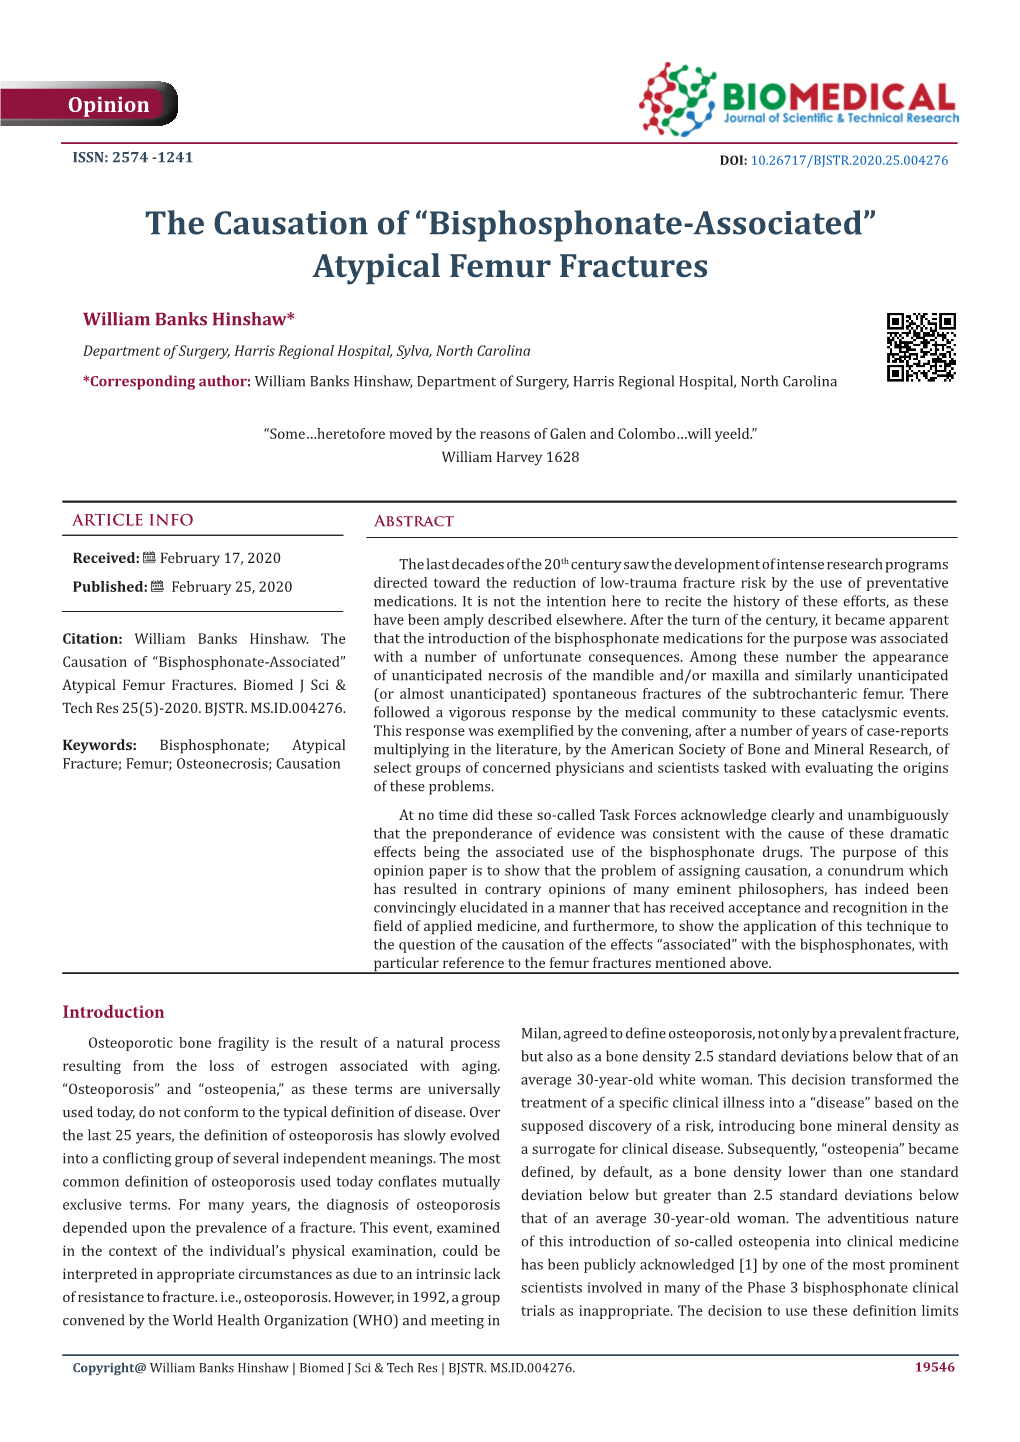 Bisphosphonate-Associated” Atypical Femur Fractures